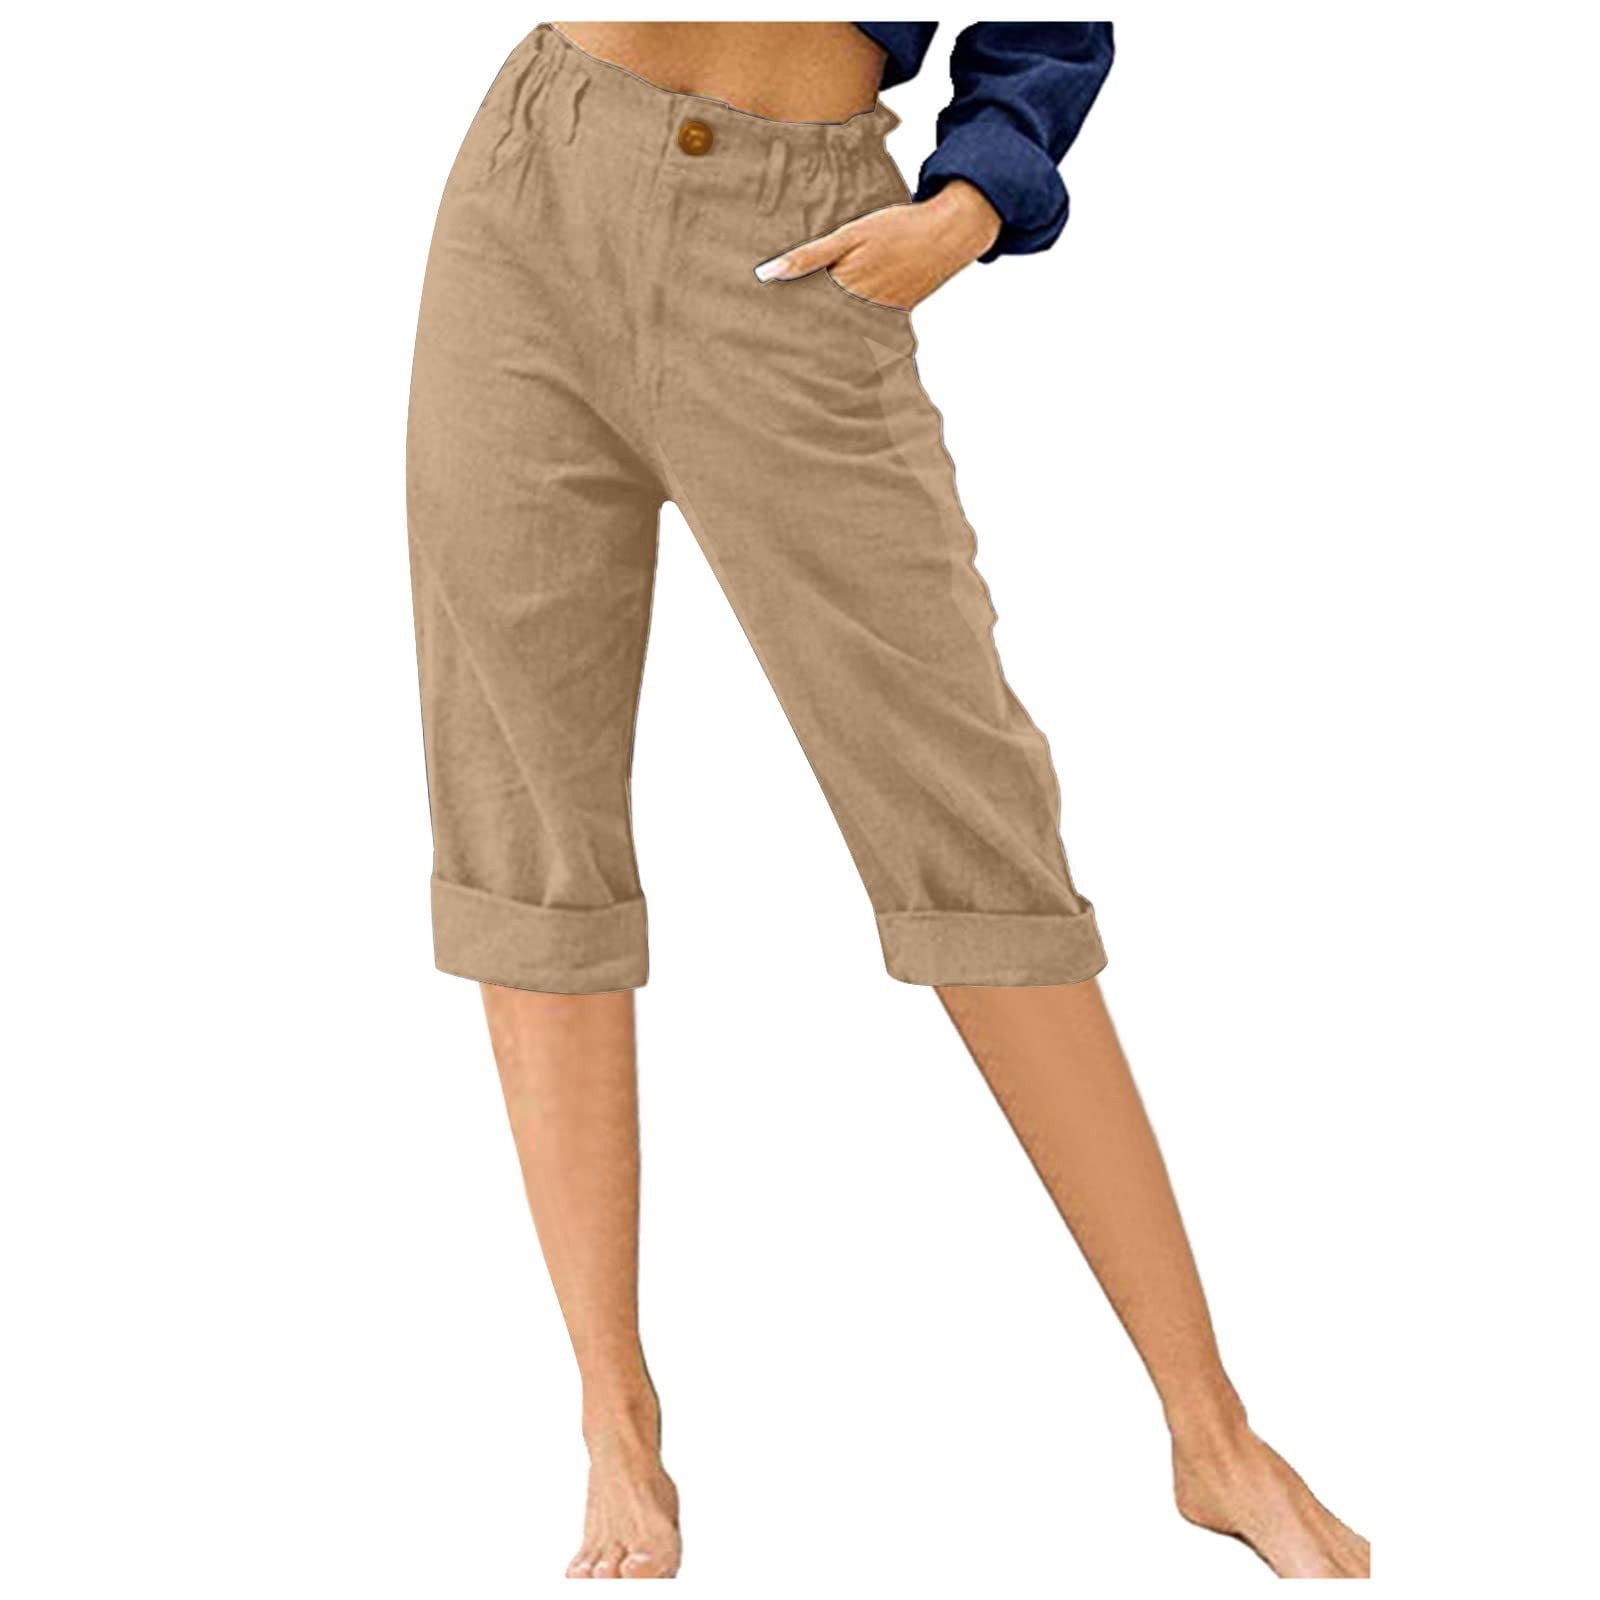 M MAROAUT Summer Pants Women Capri Pants for Women Cargo